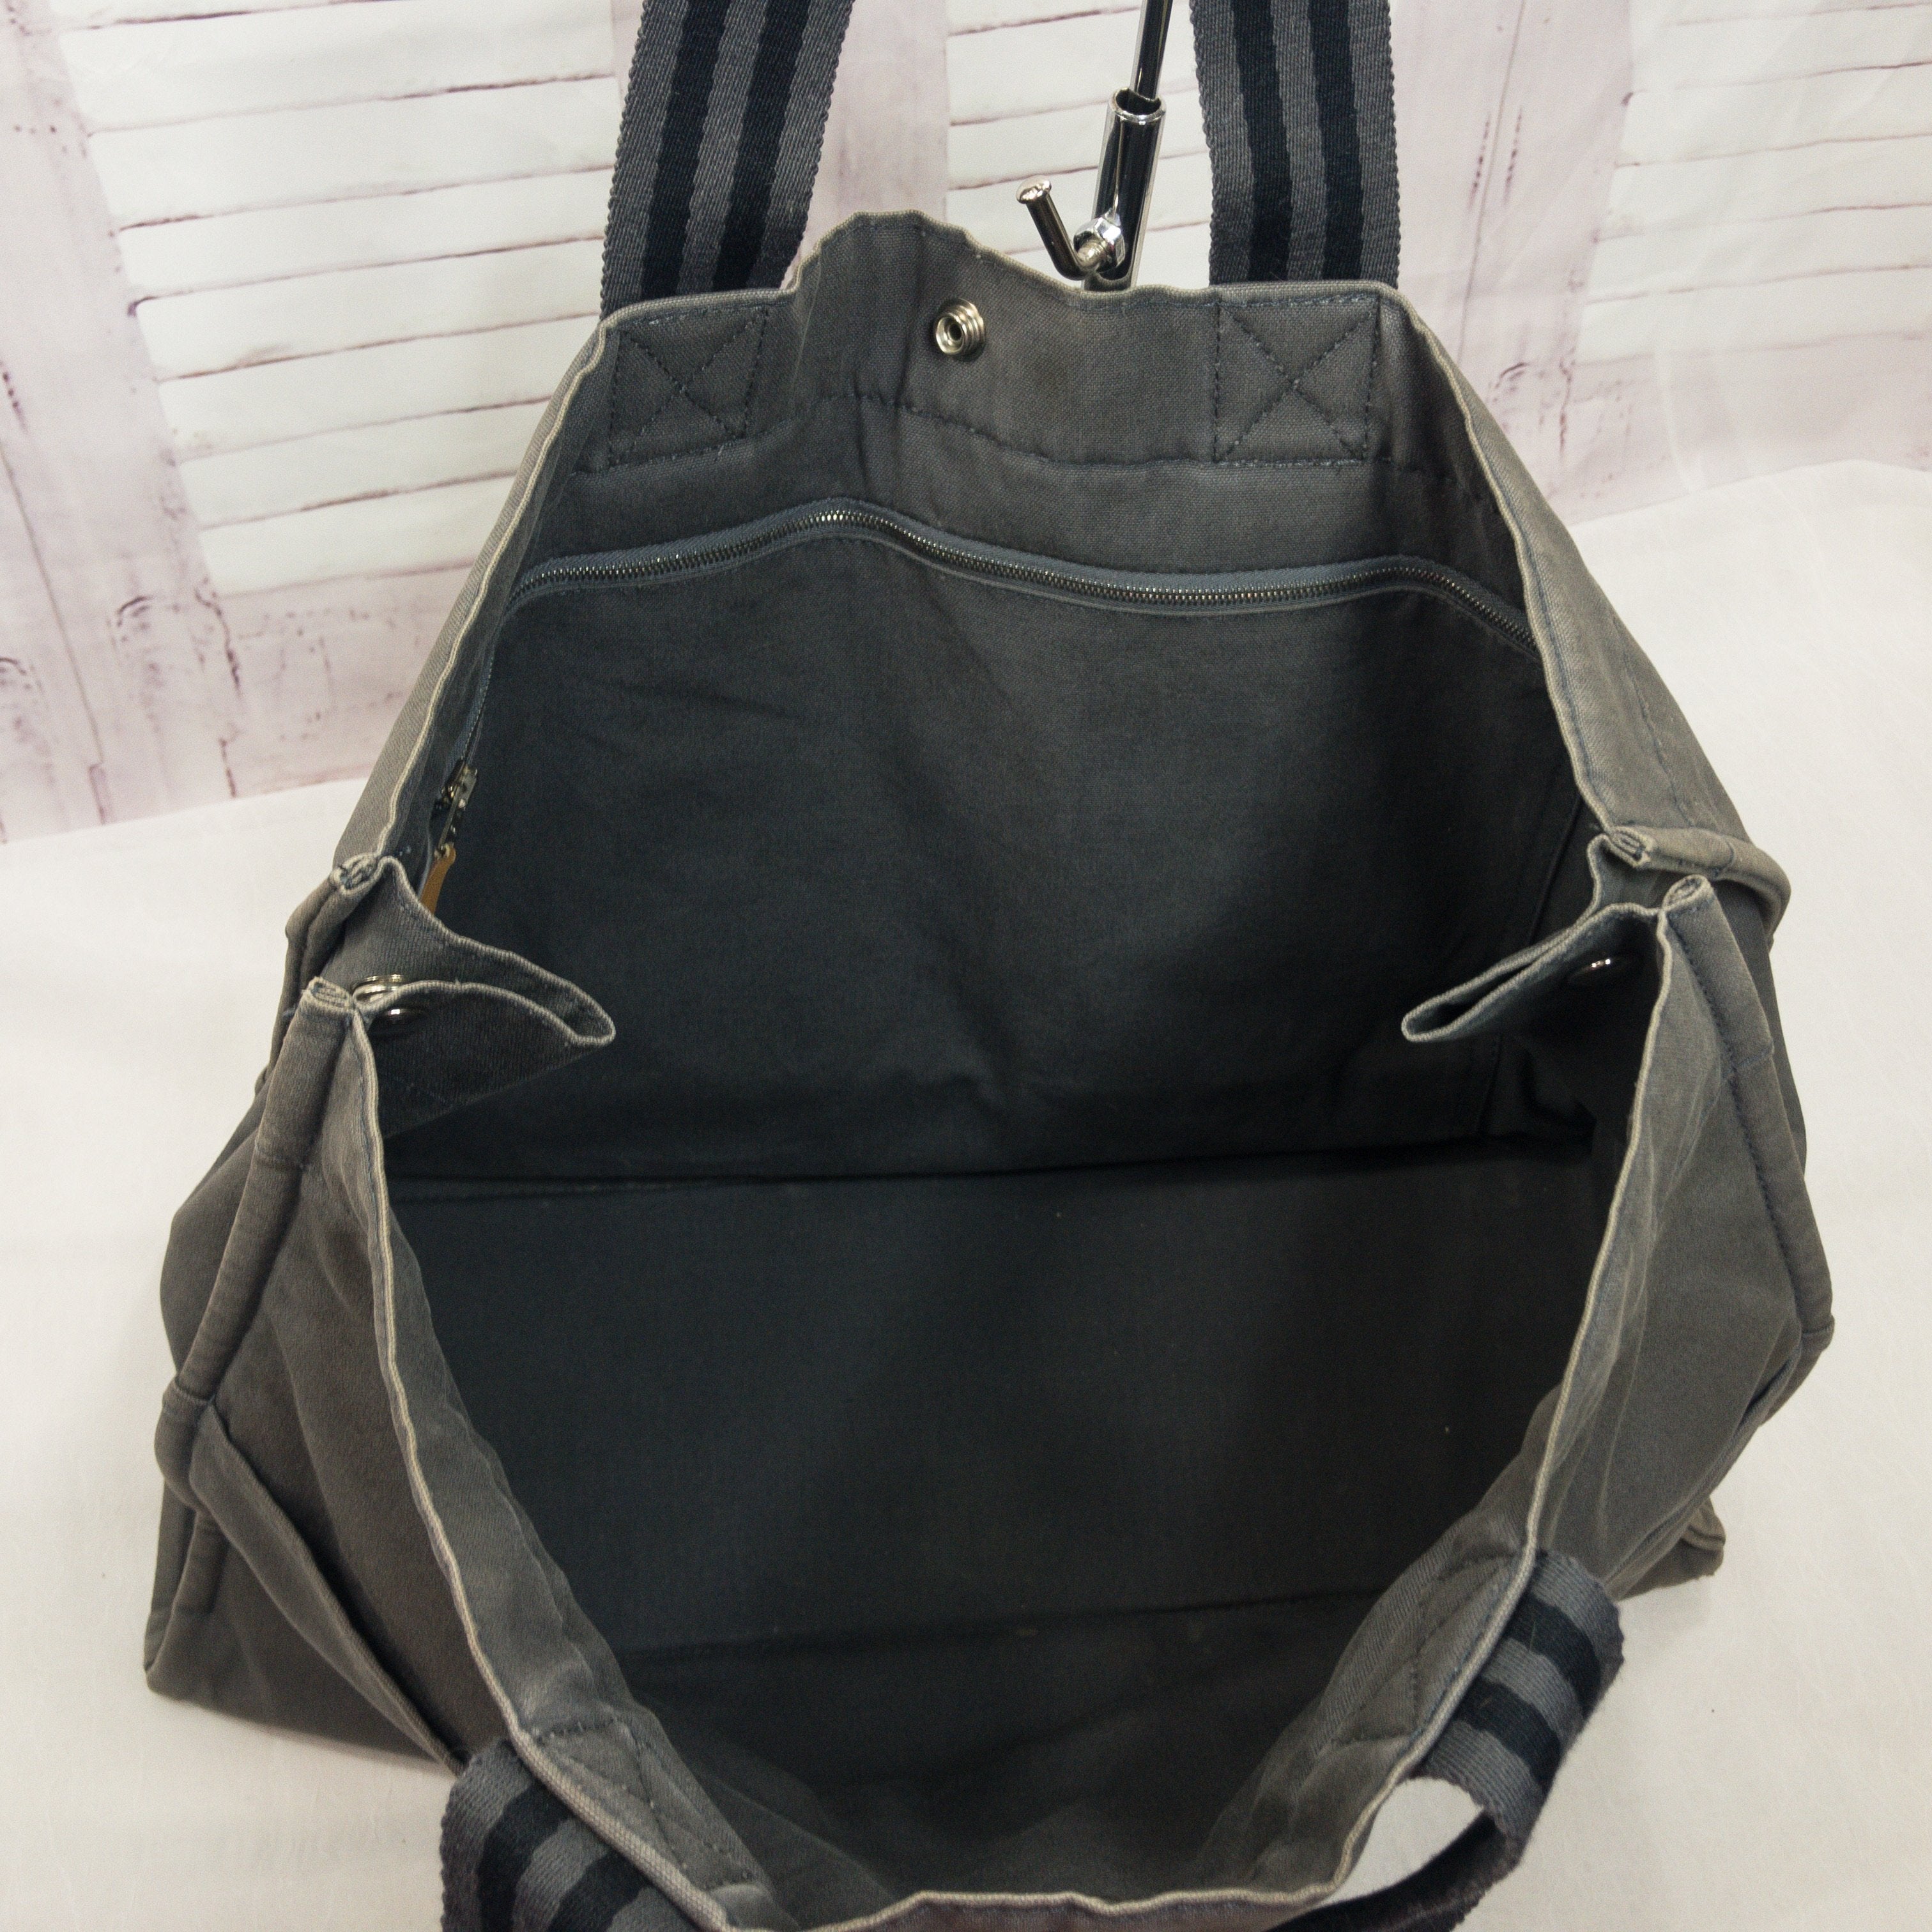 Authentic Hermes Fourre Tout PM Tote Handbag Black Exterior with Gray  Stripe.